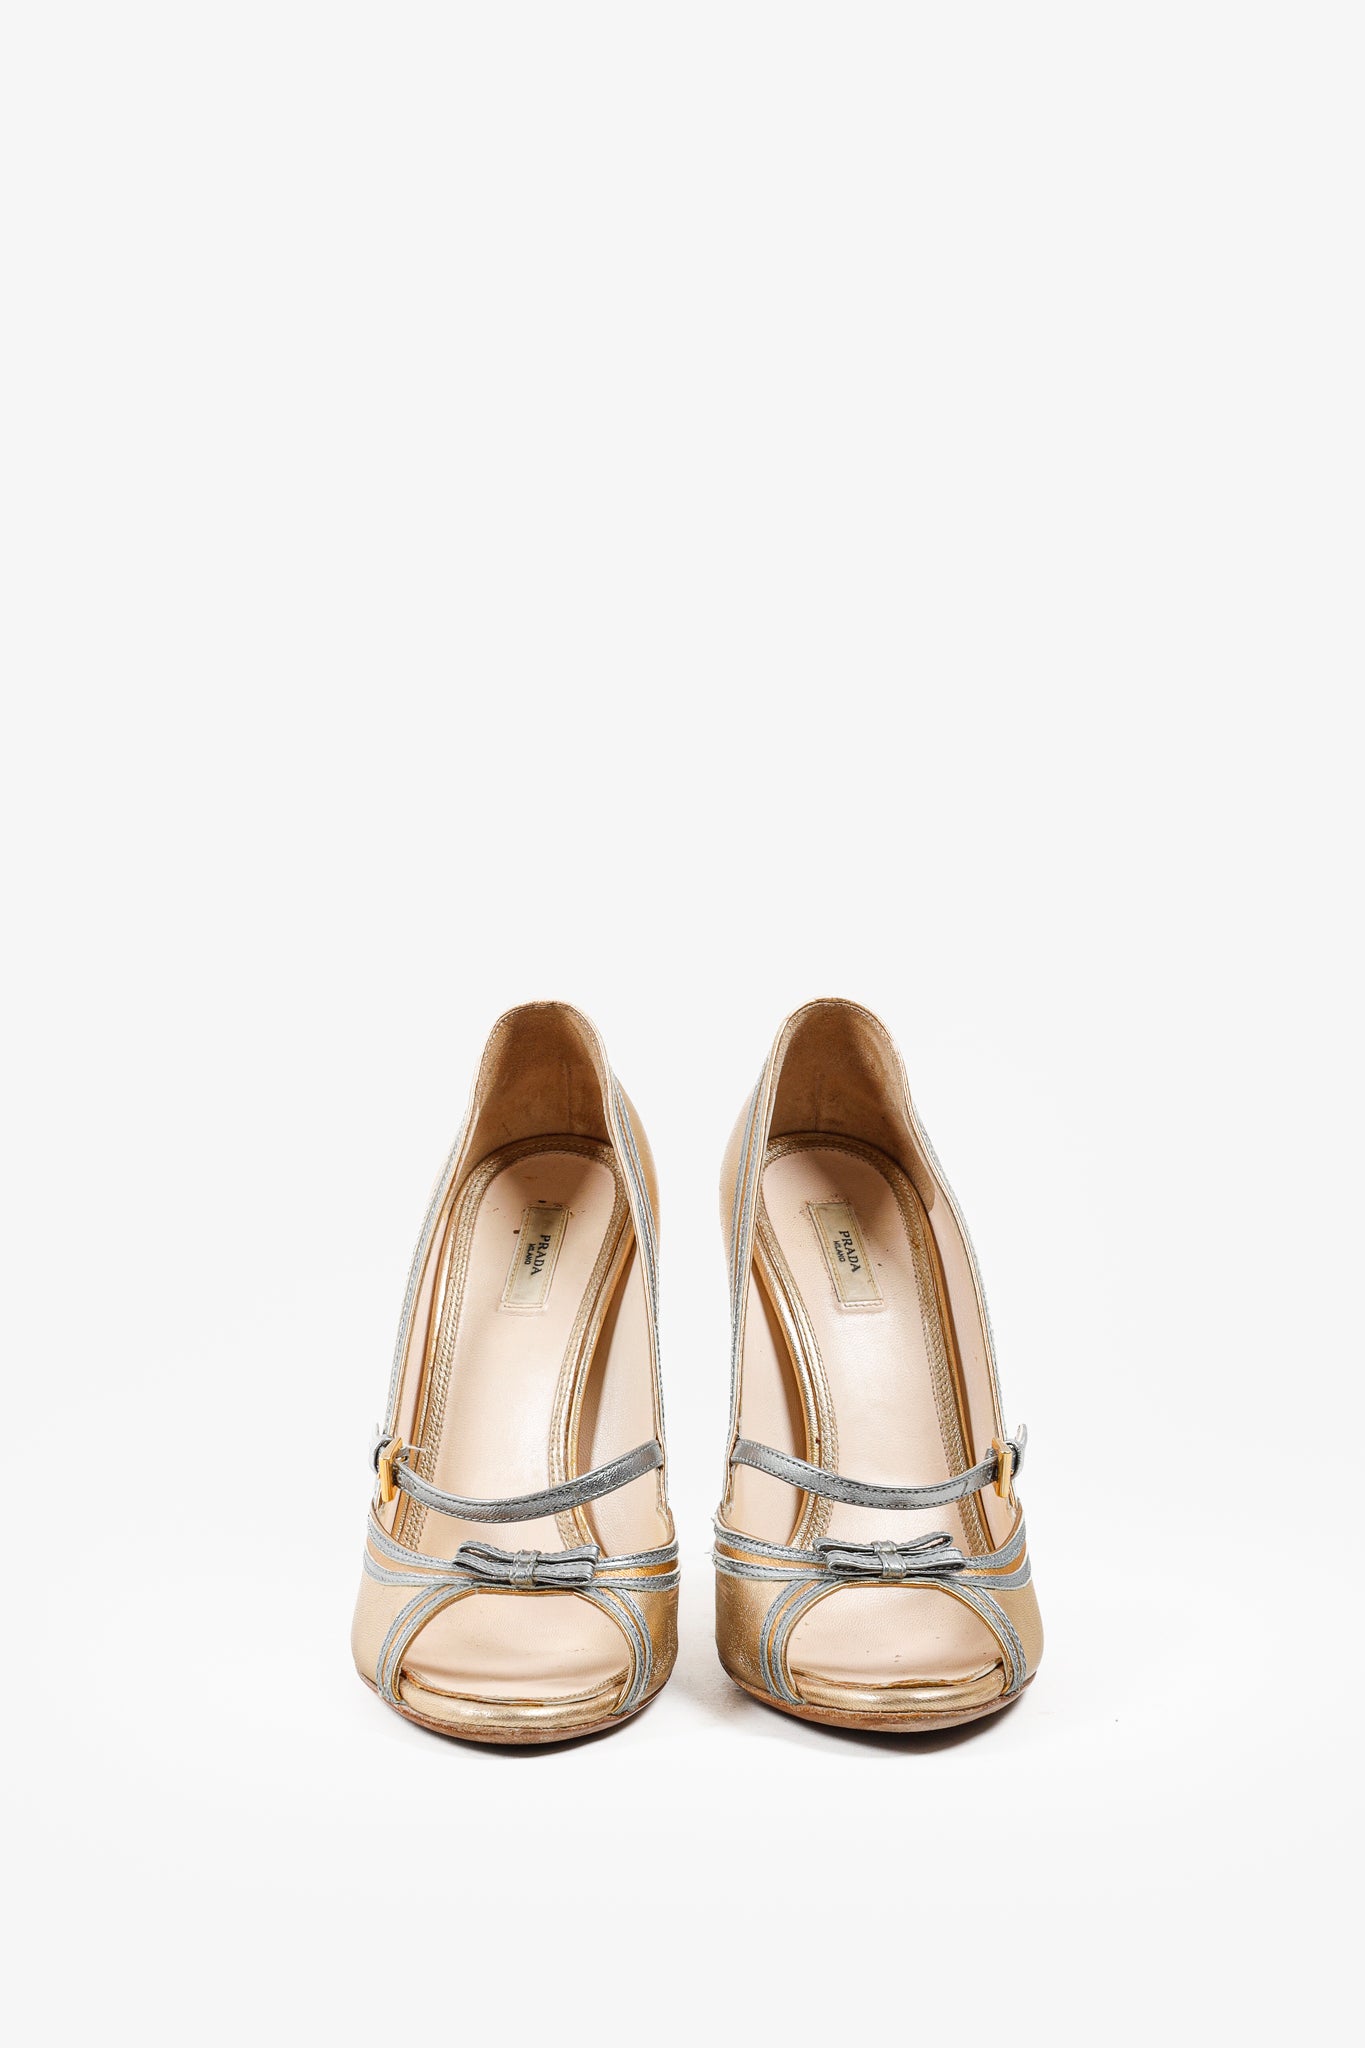 Prada Gold & Silver Mary Jane Embellished Heel Open-Toe Pumps